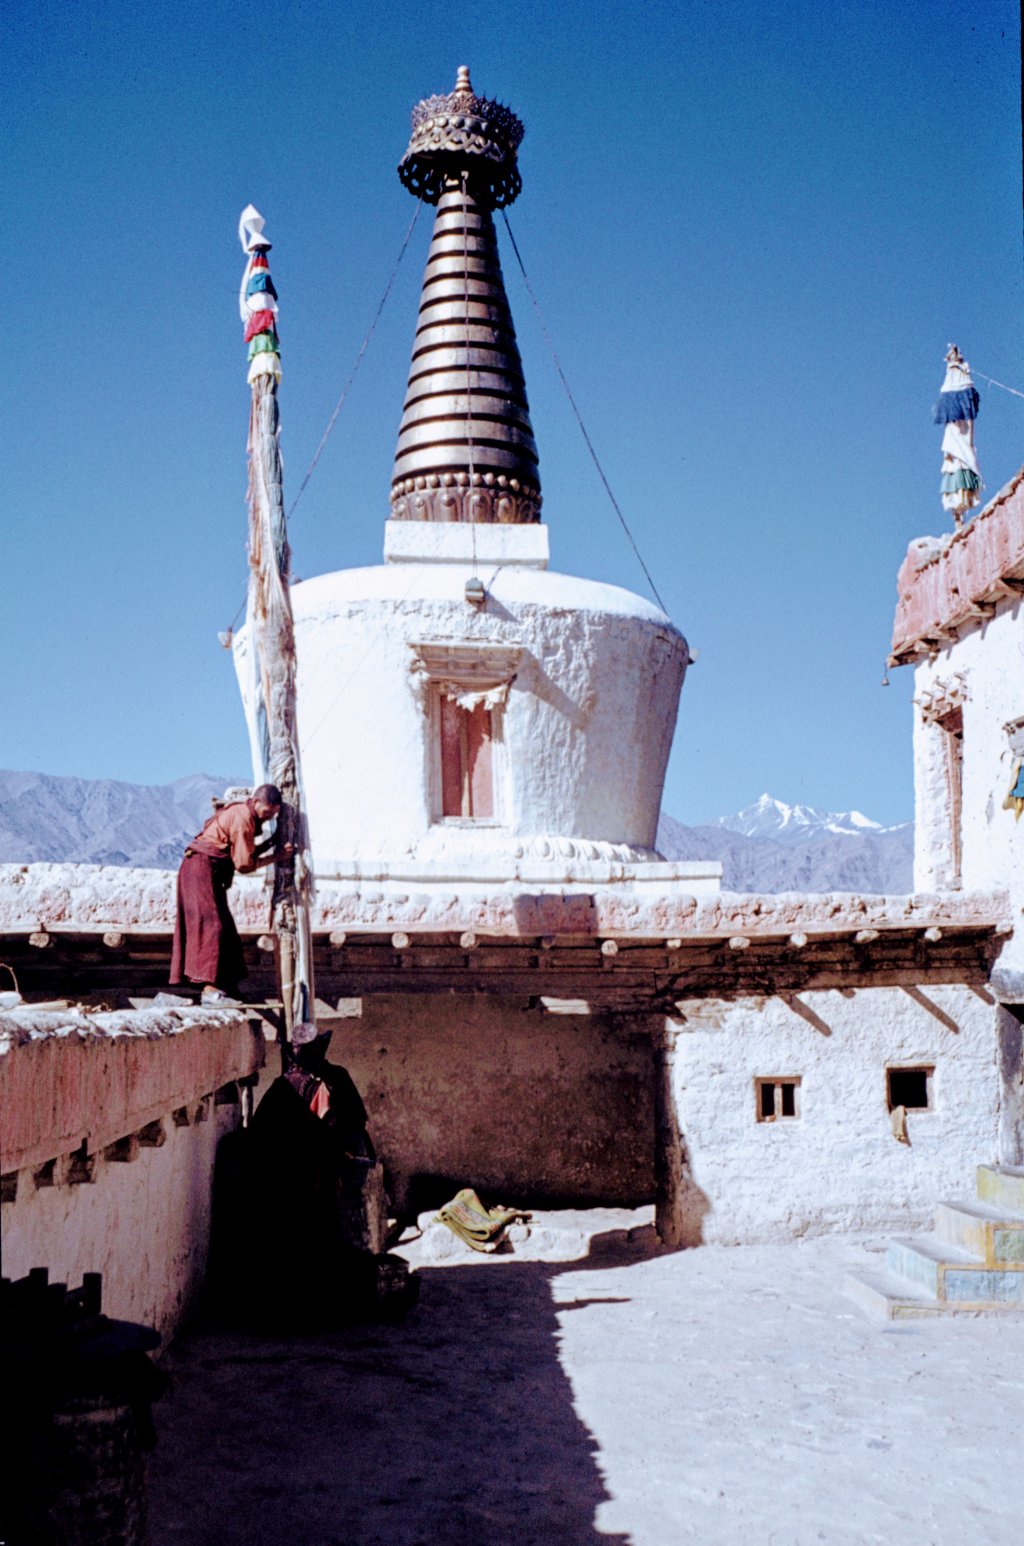 image-12115097-Ladakh014-aab32.w640.jpeg